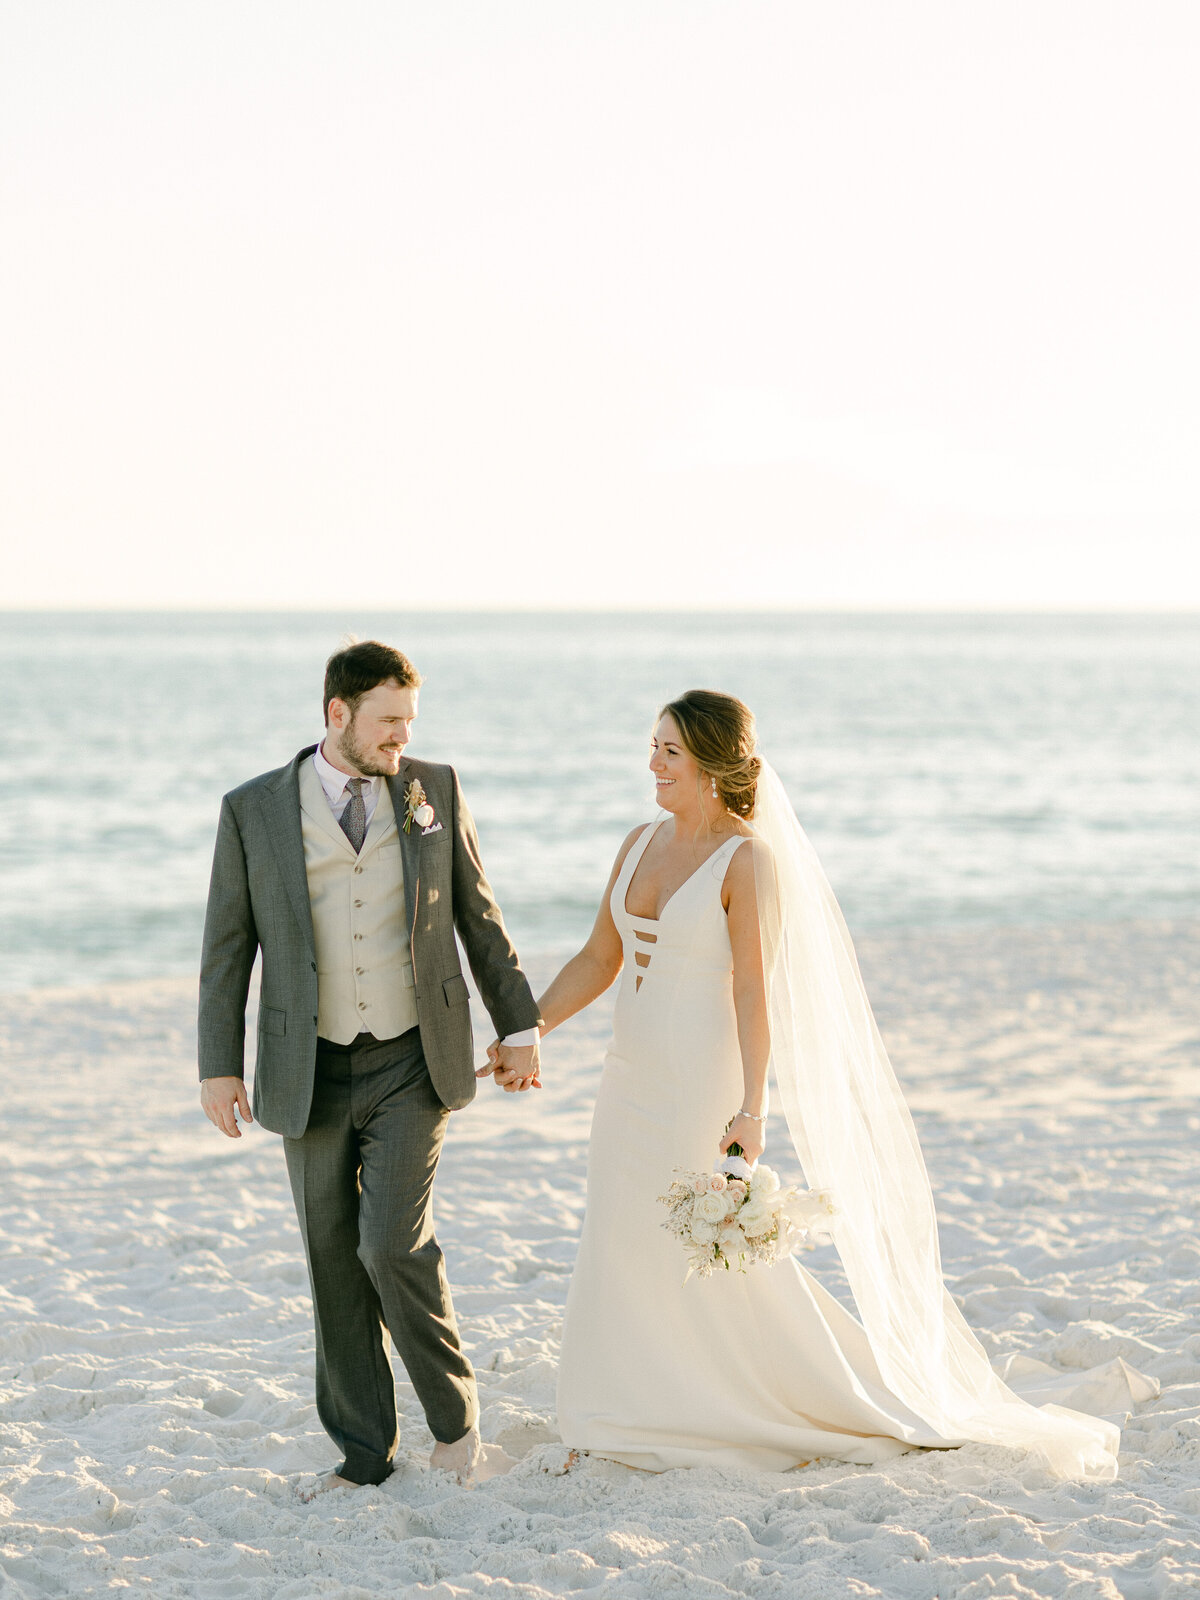 Marybeth and Ryan - Destin Florida Wedding Photographer - Darian Reilly Photography-55